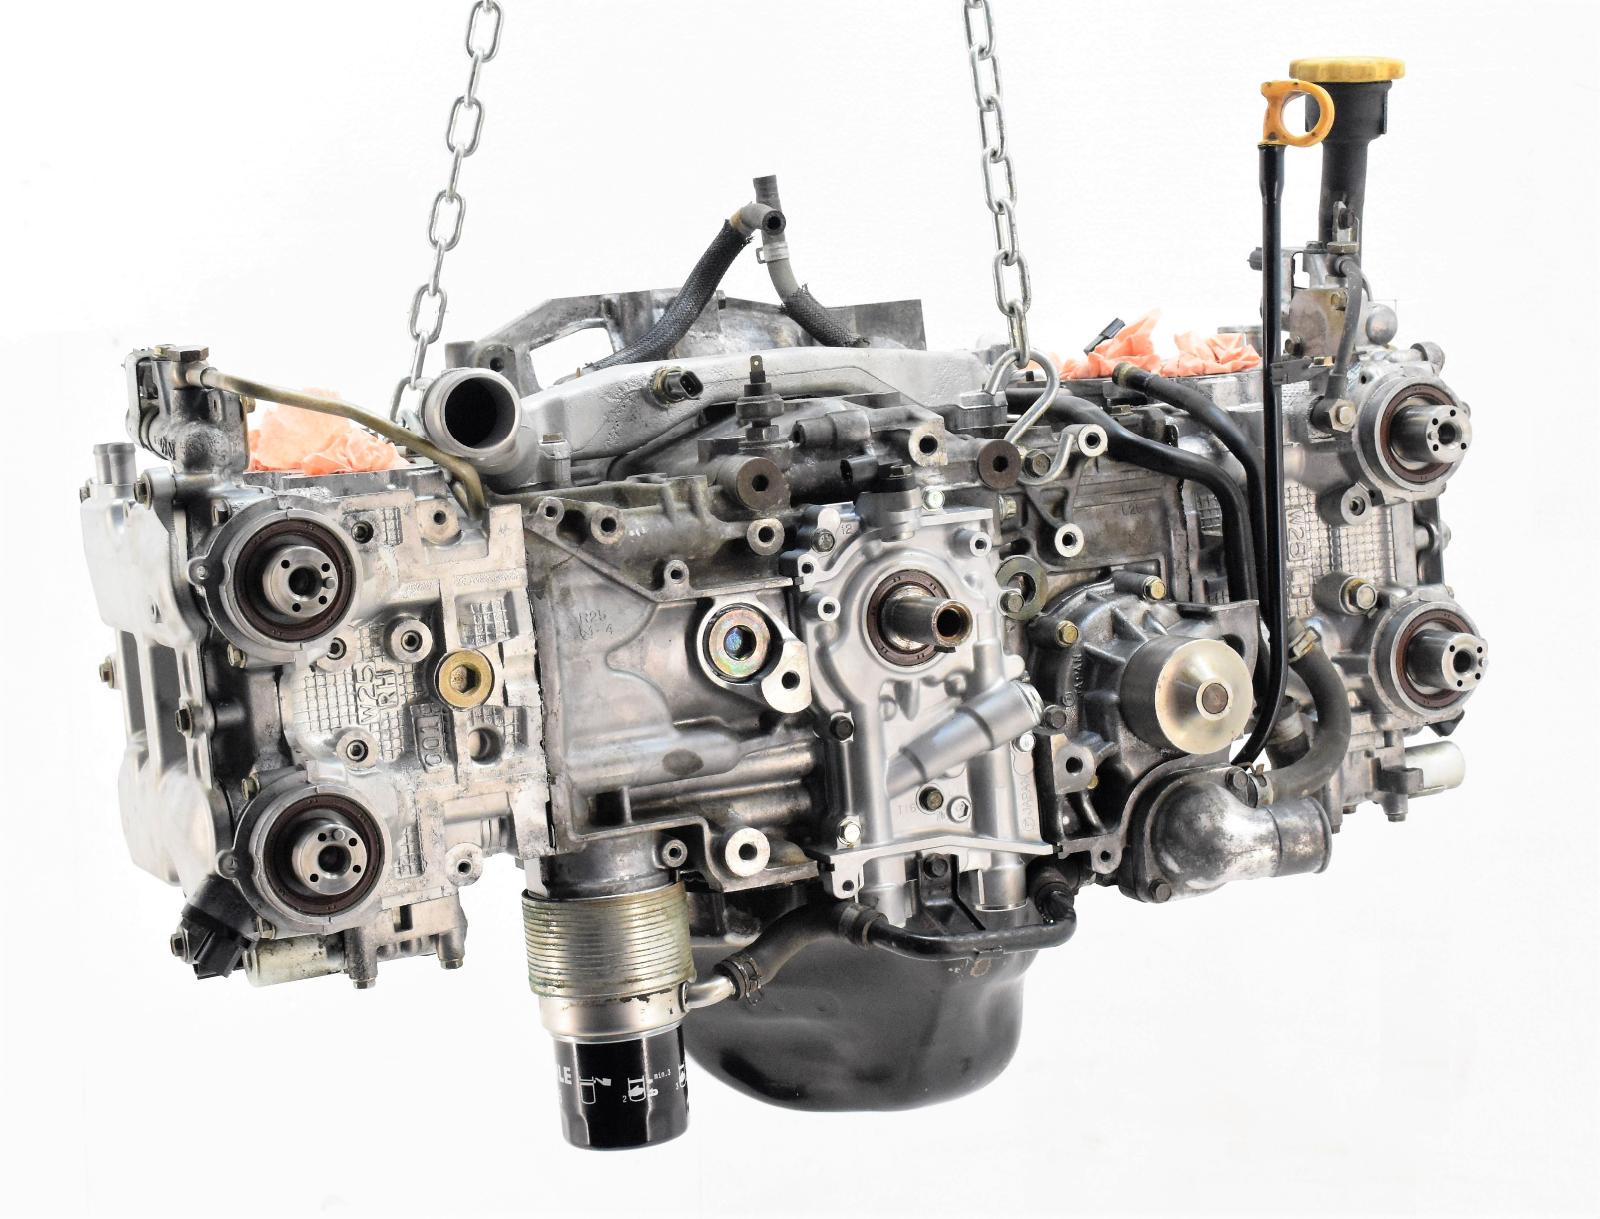 Subaru Impreza Wrx Sti 2.5 Rebuilt Motor Engine Boxer